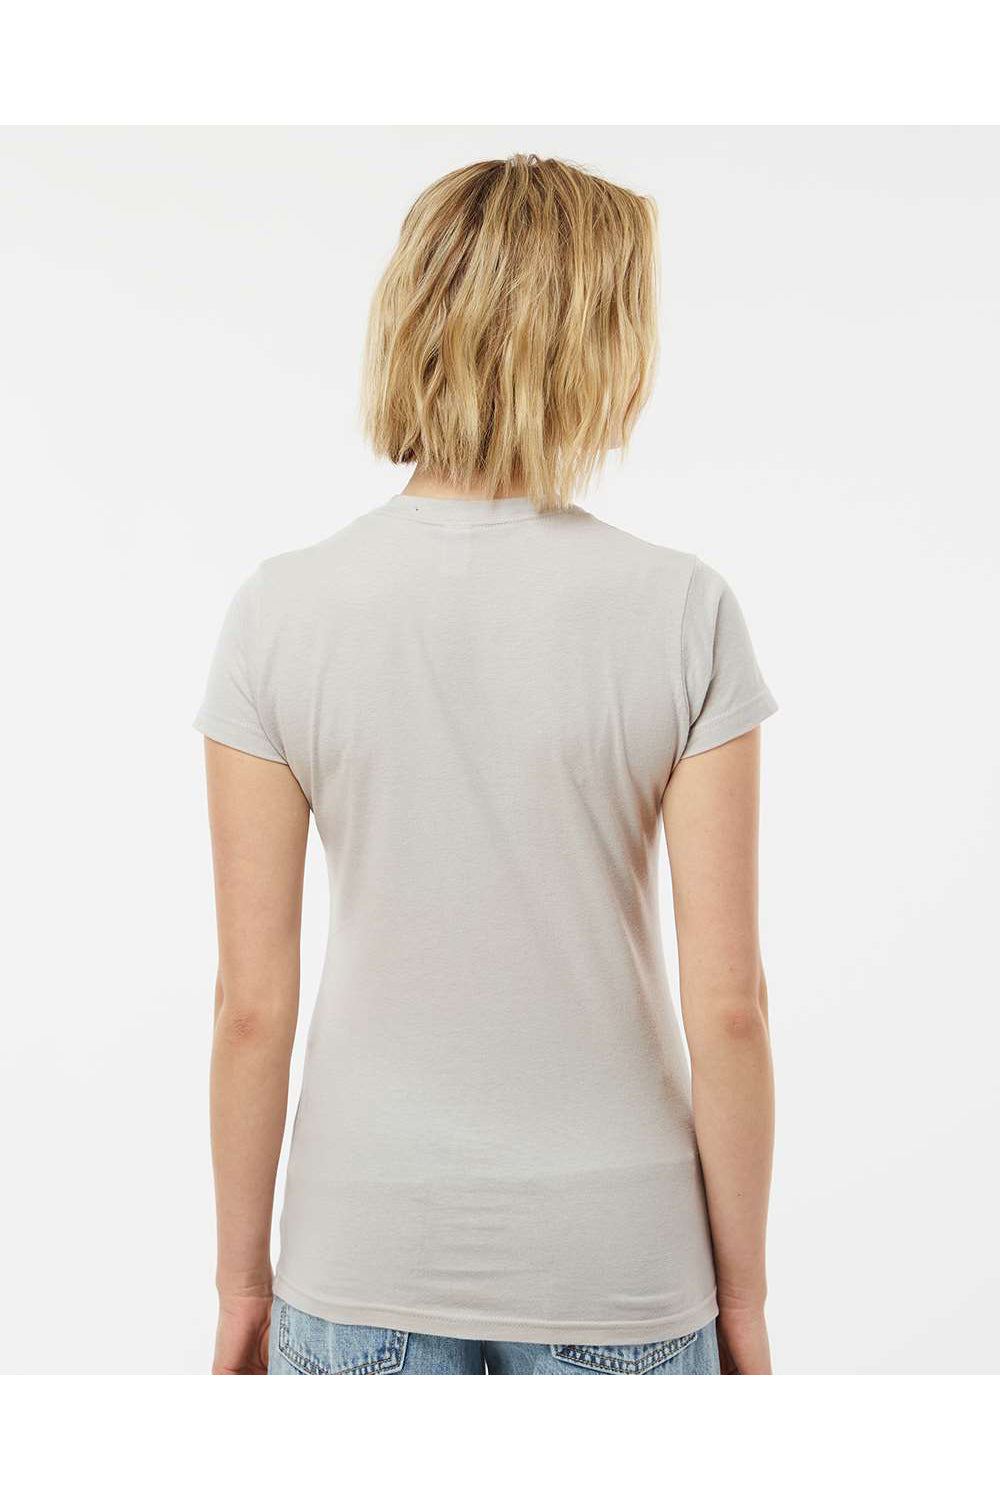 Tultex 213 Womens Fine Jersey Slim Fit Short Sleeve Crewneck T-Shirt Silver Grey Model Back